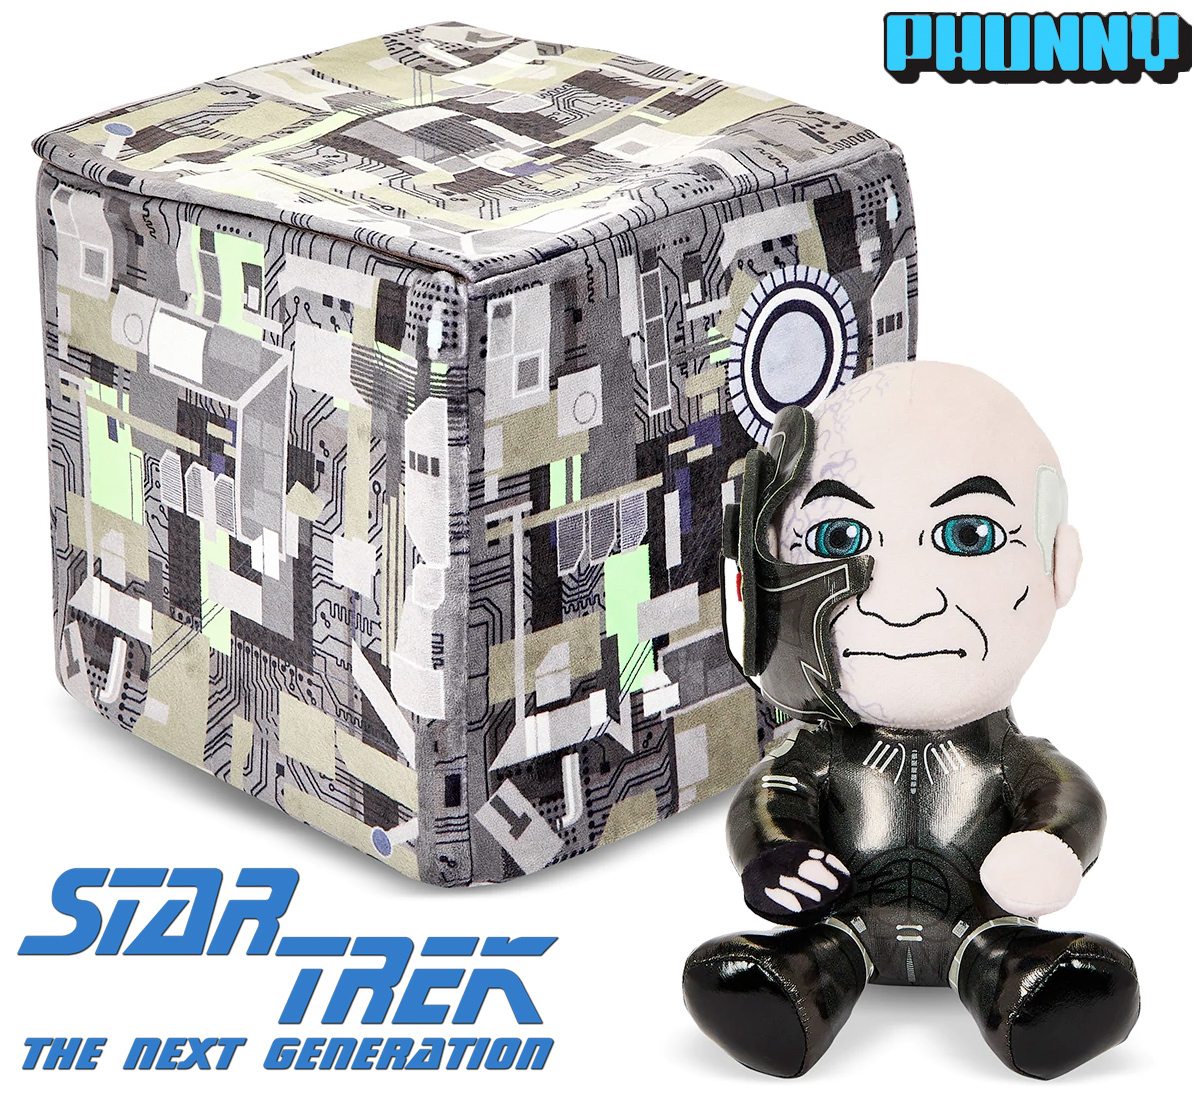 Cubo Borg e Locutus of Borg (Picard) Phunny Star Trek